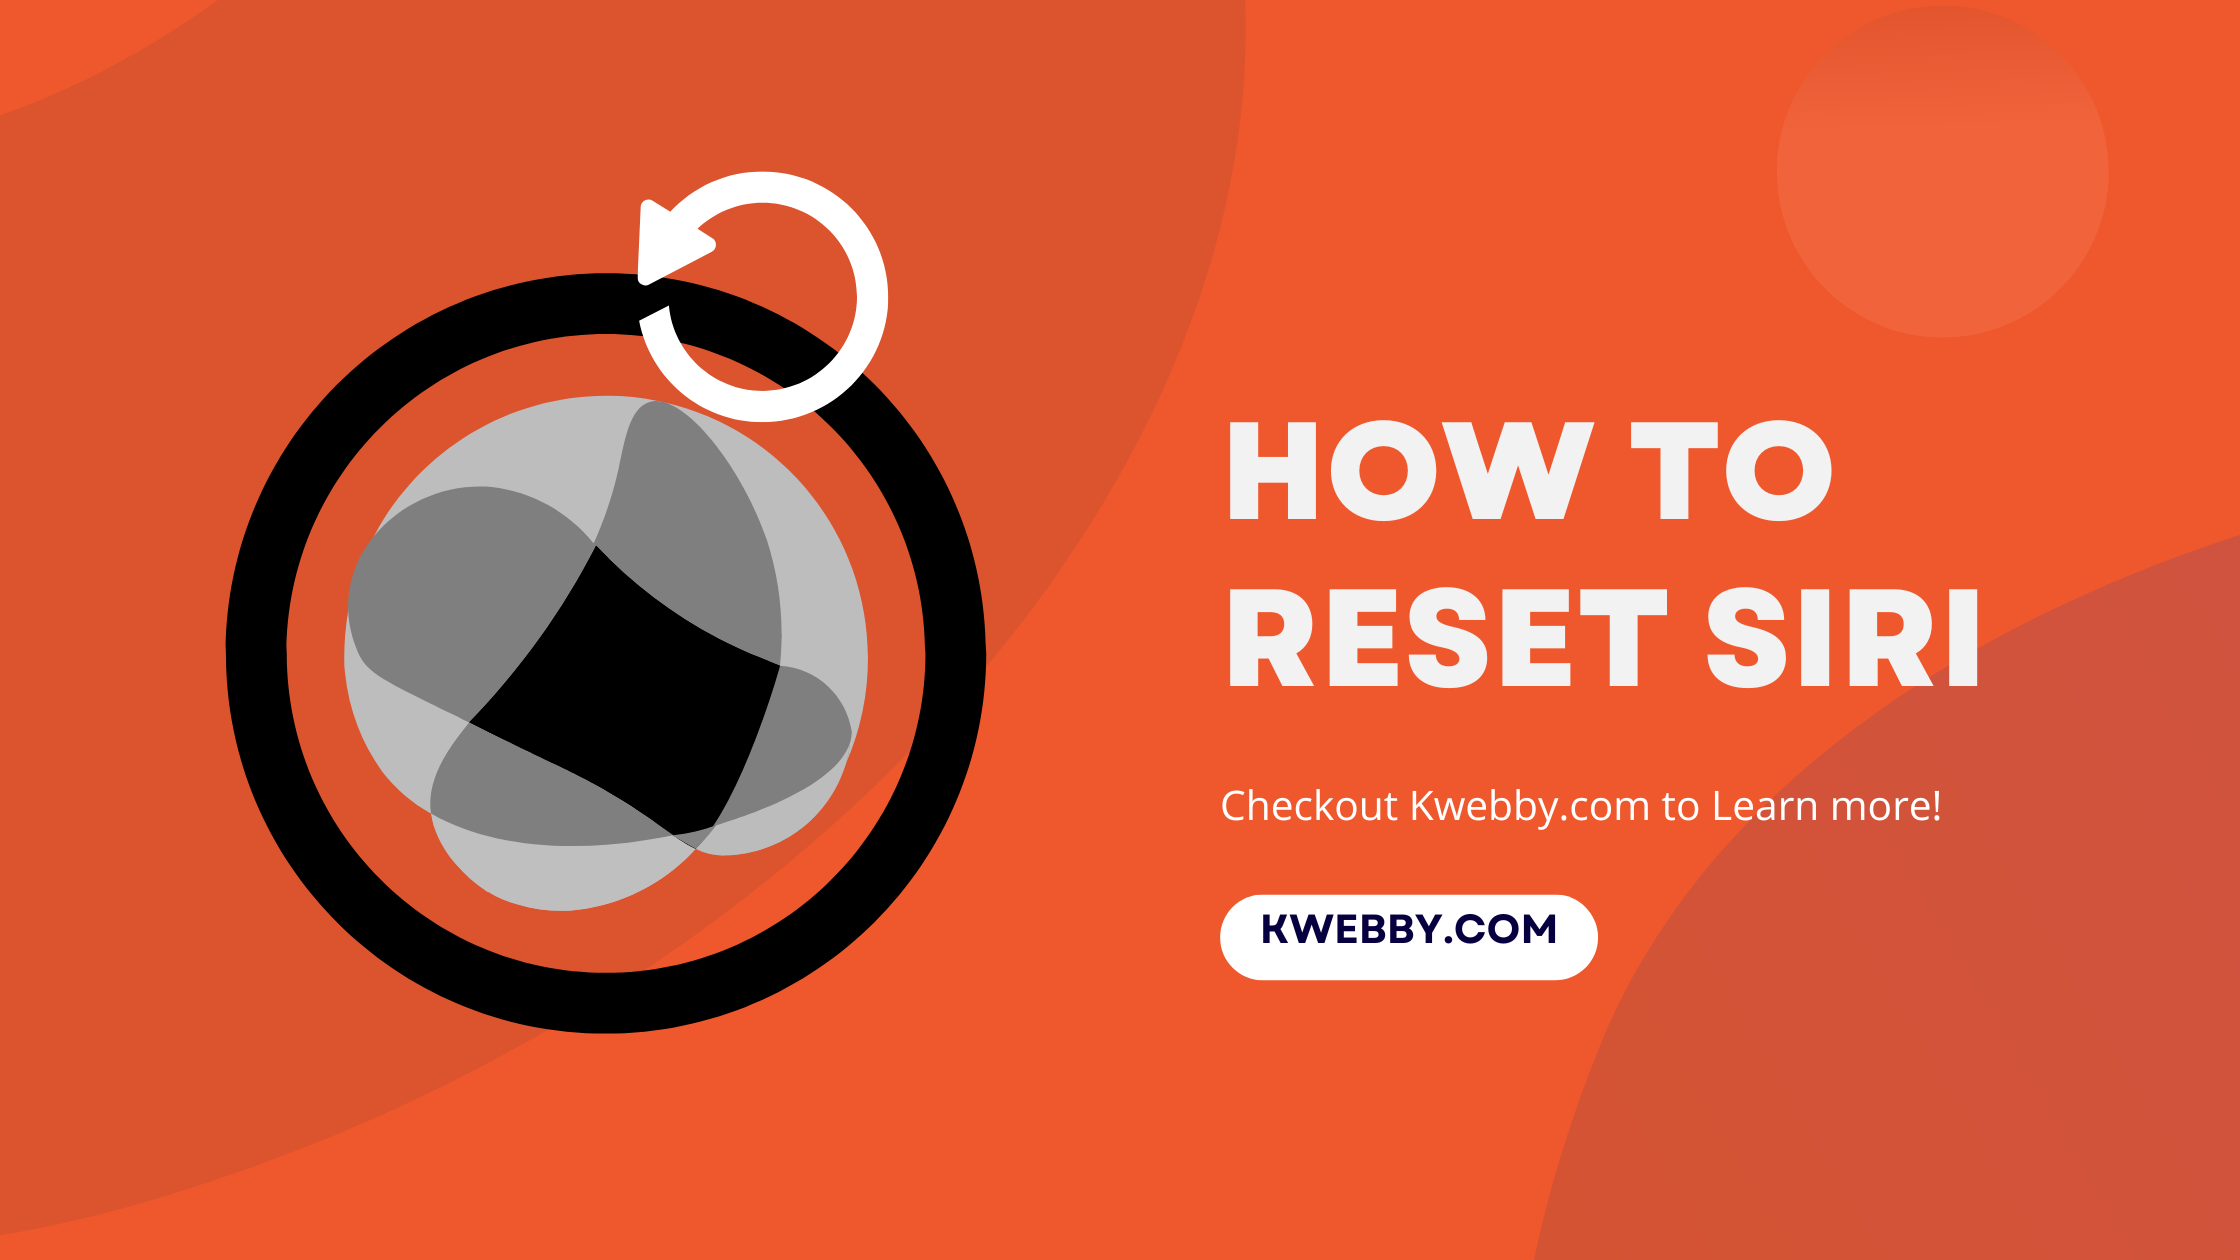 How to Reset Siri